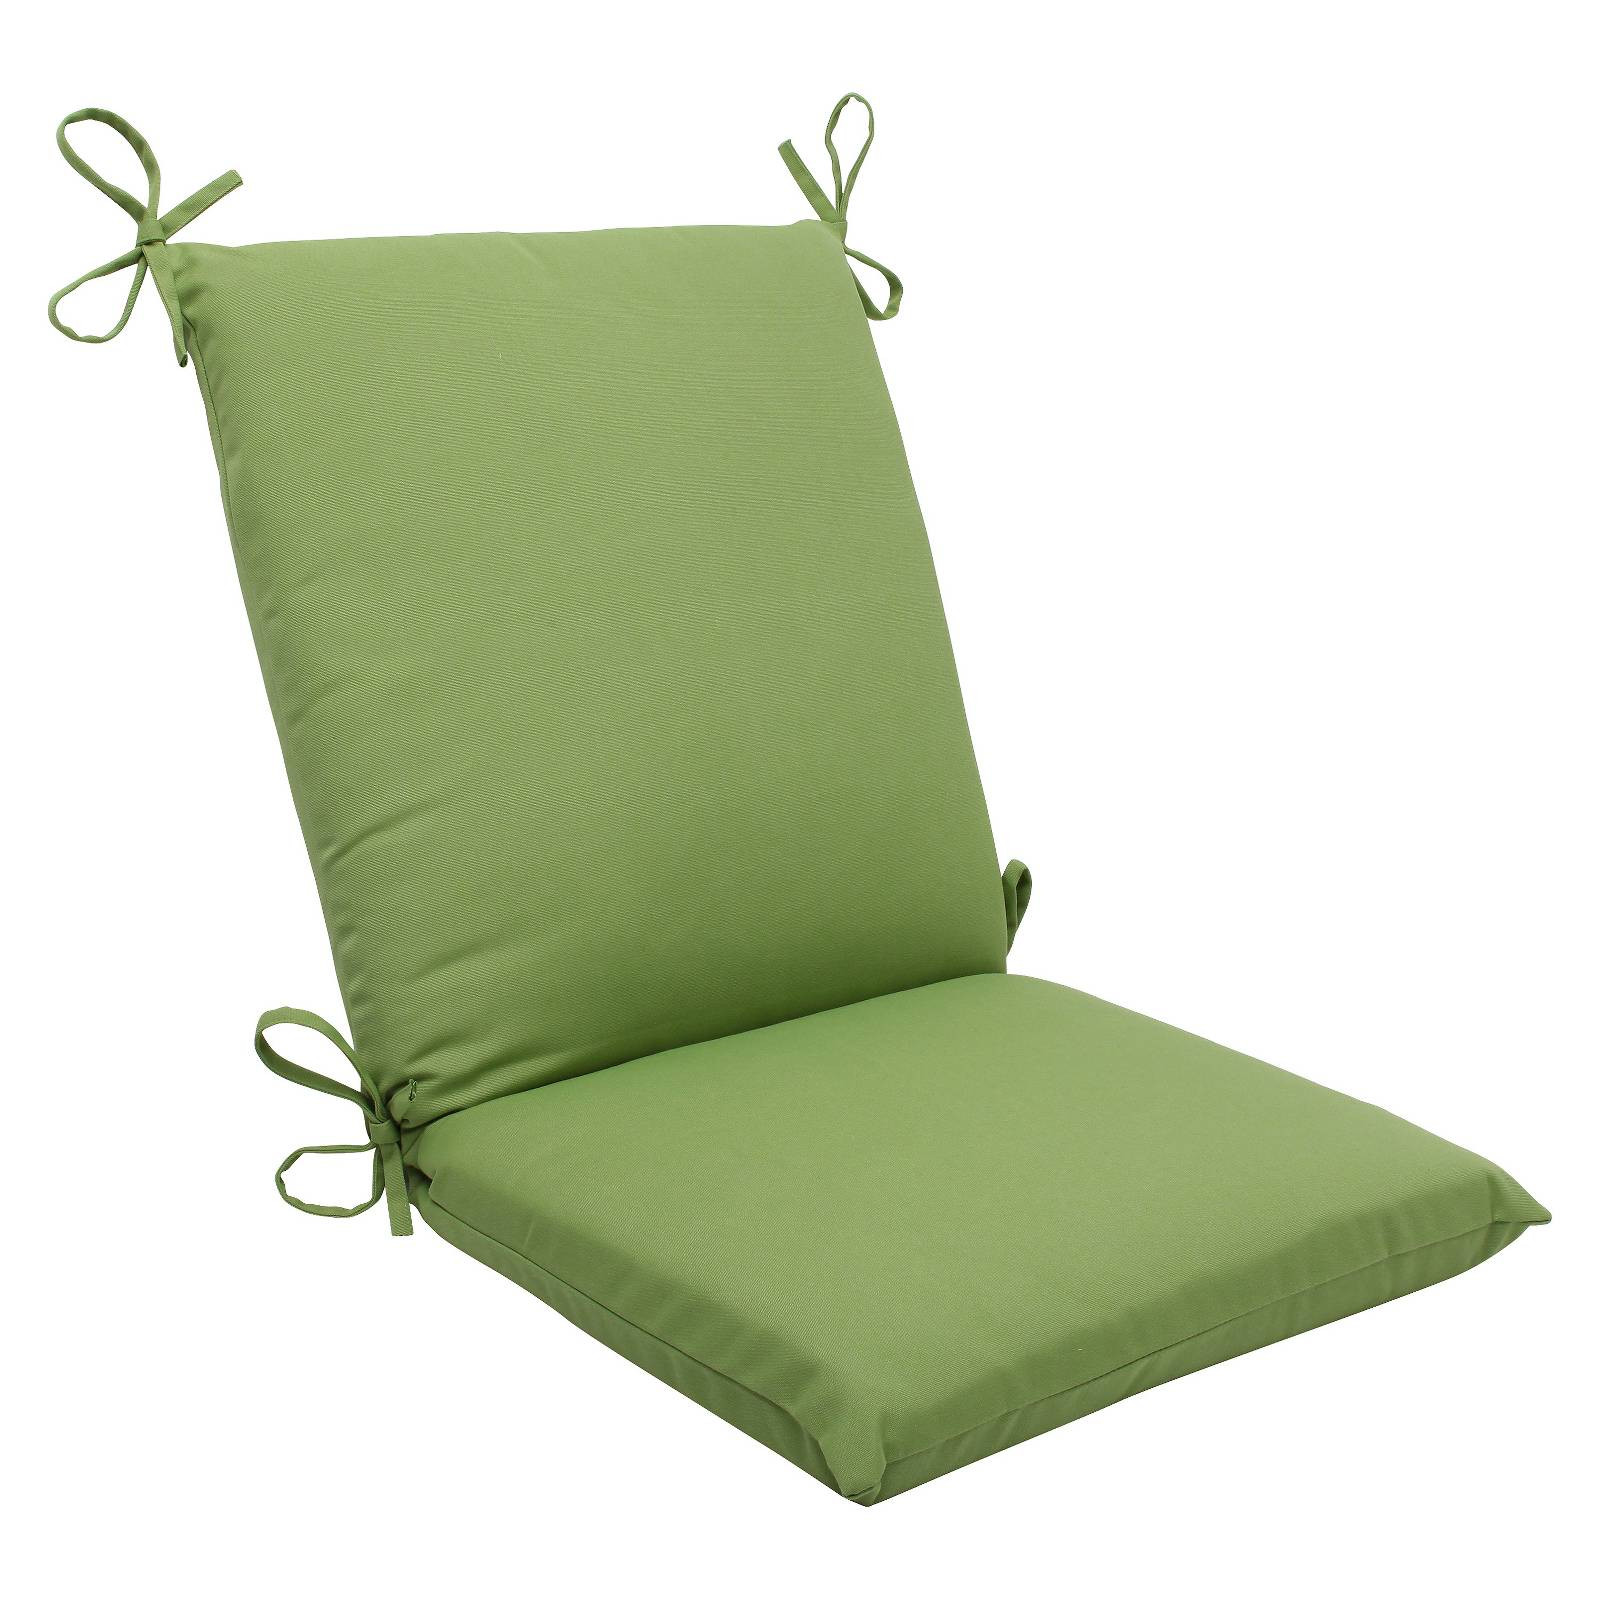 Best ideas about Sunbrella Patio Cushions
. Save or Pin Sunbrella Canvas Outdoor Squared Edge Chair Cushion Now.